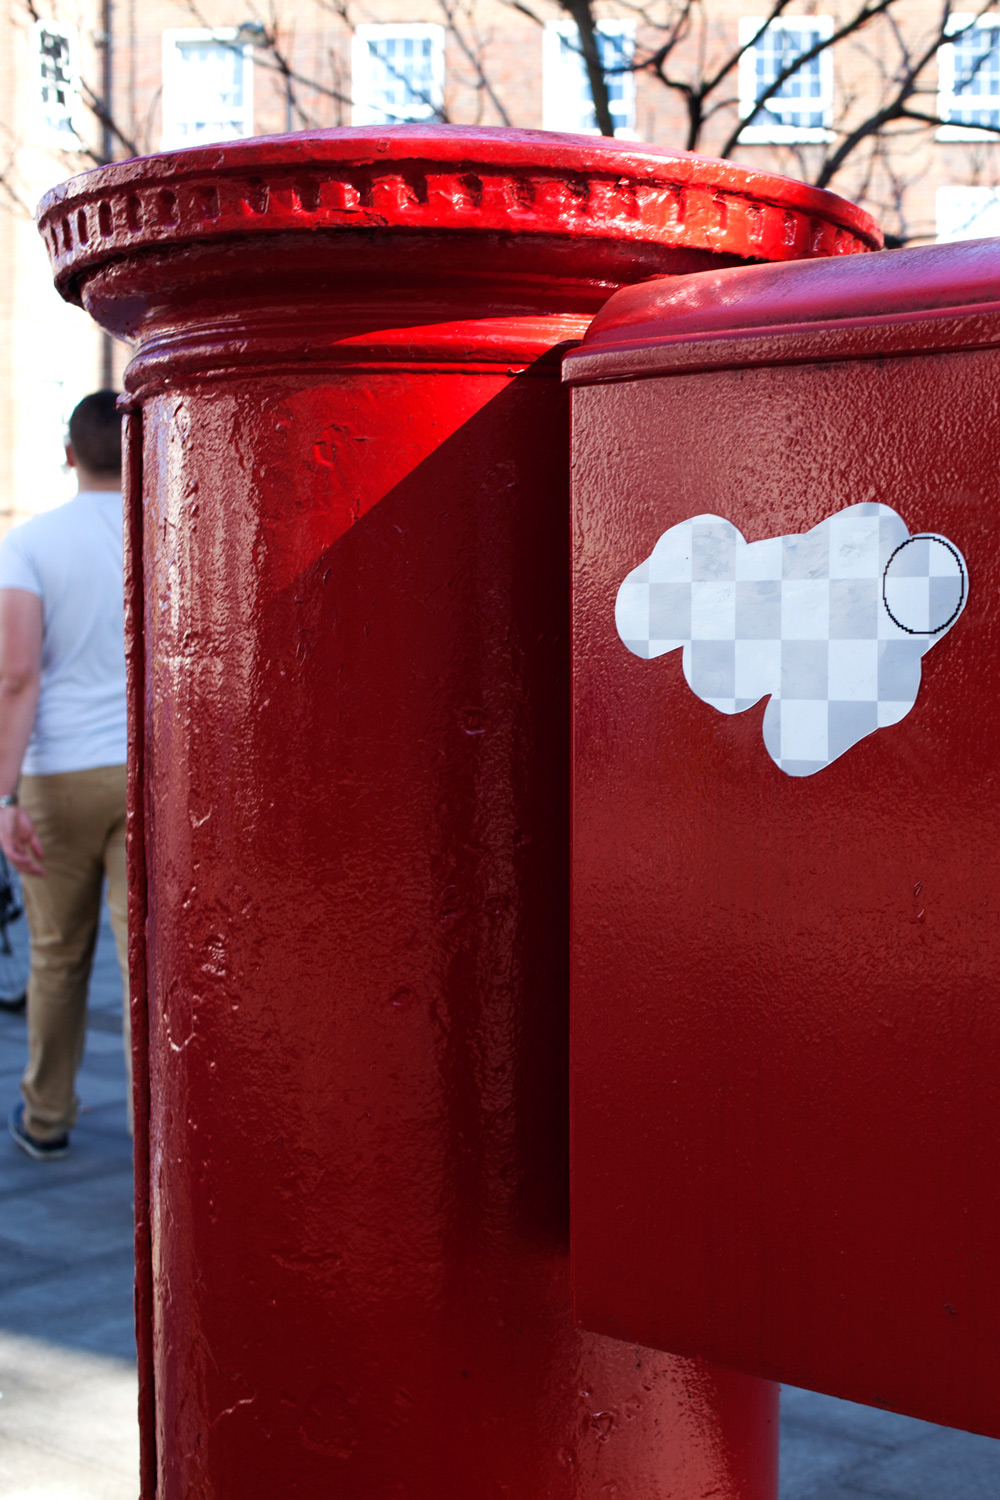 Clever Photoshop Street Art Is “Erasing” London